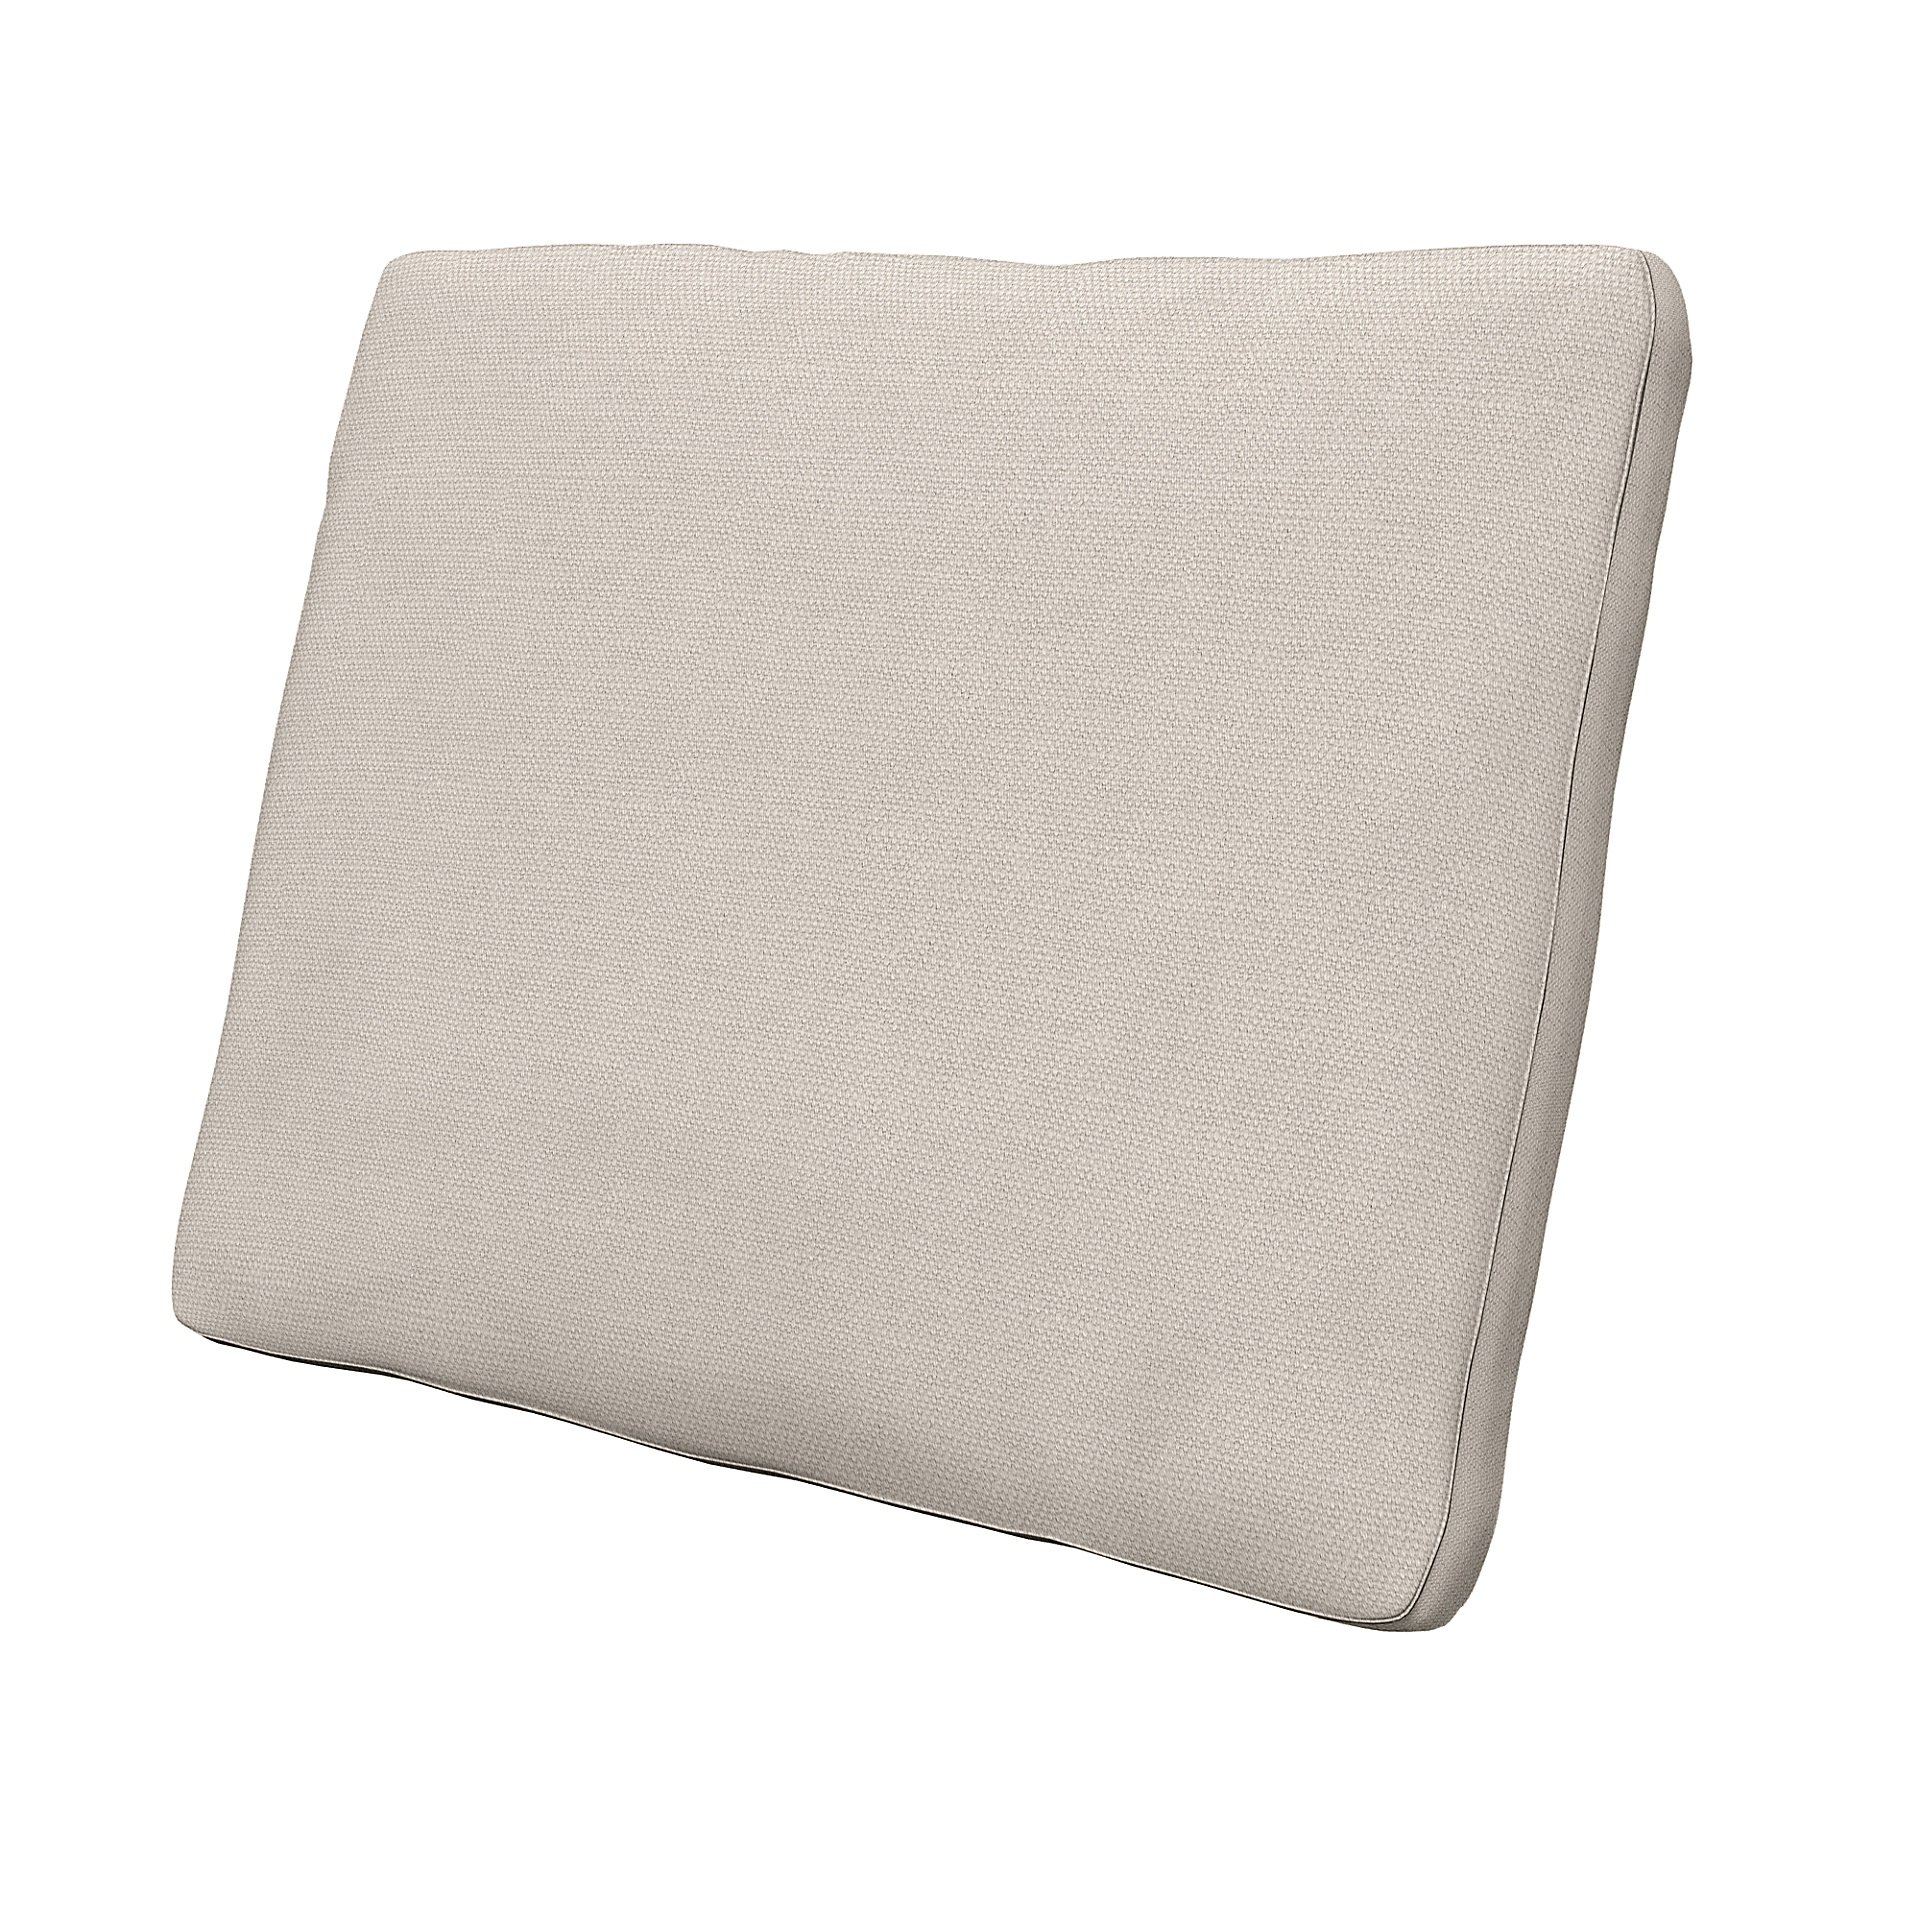 IKEA - Cushion Cover Karlstad 58x48x5 cm, Chalk, Linen - Bemz